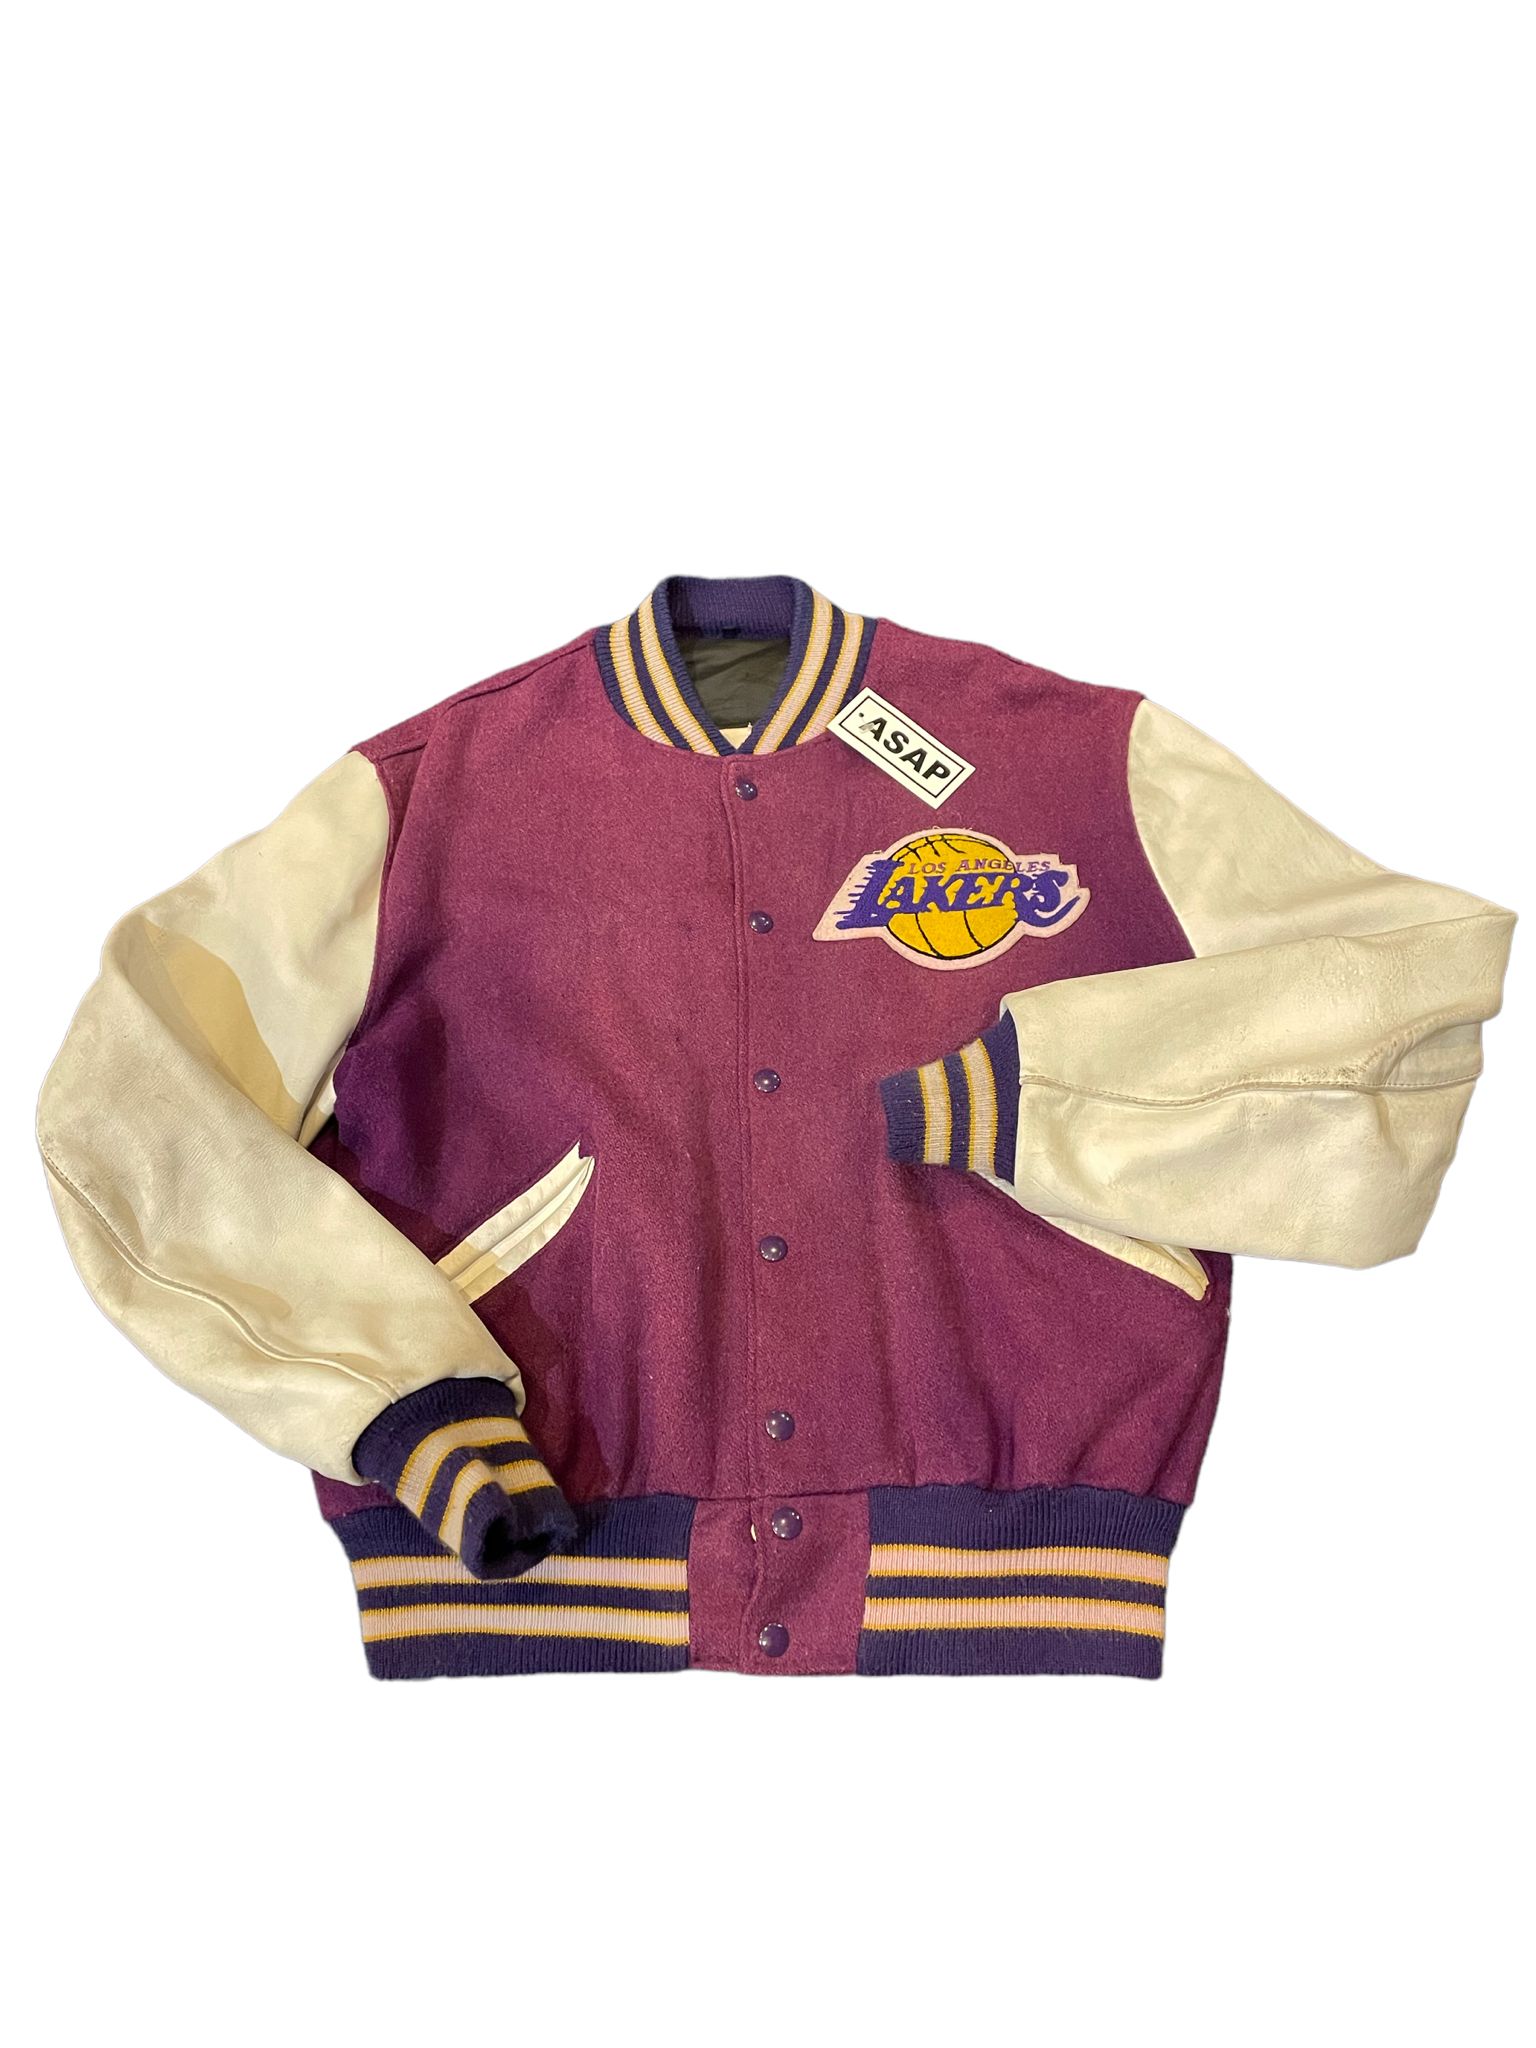 MITCHELL & NESS Los Angeles Lakers The Scotch Varsity Jacket  BFJKBW19117-LALPURP - Karmaloop